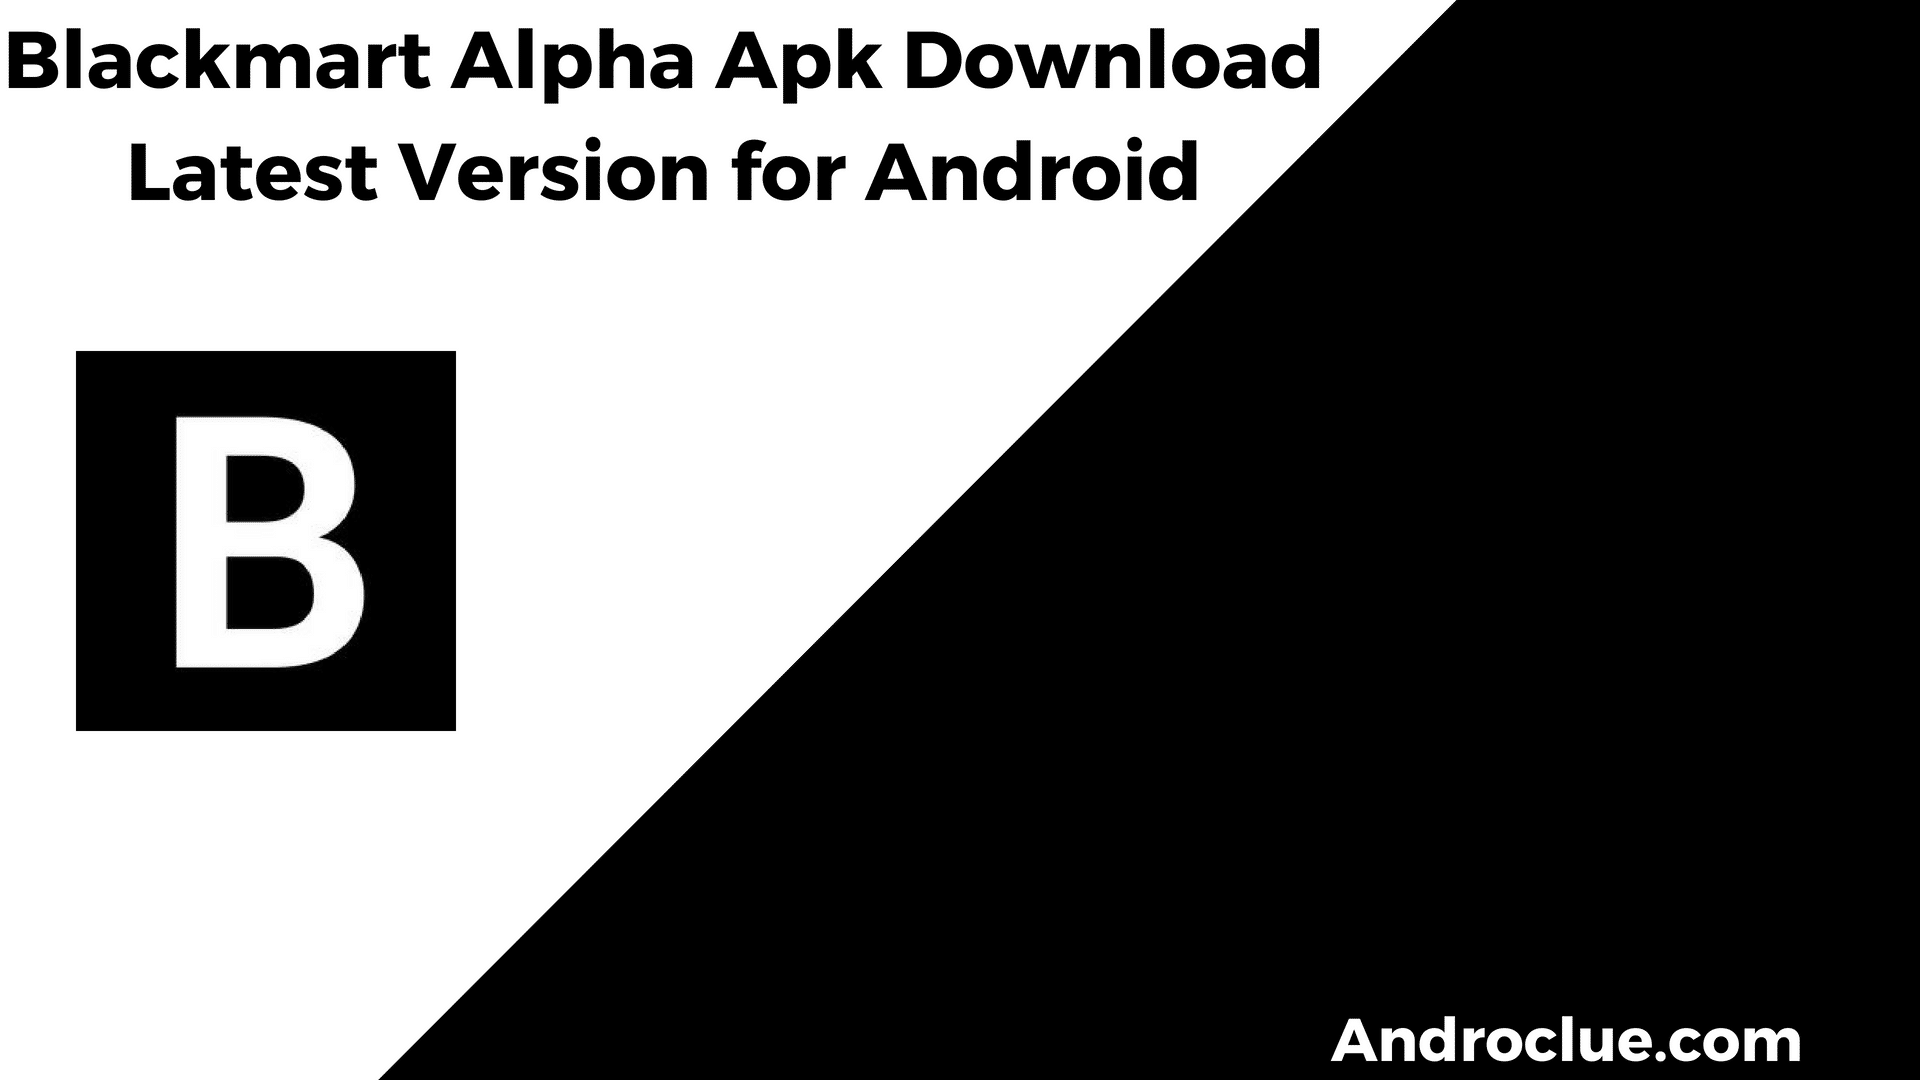 Blackmart Alpha Apk Download Latest Version For Android 2019